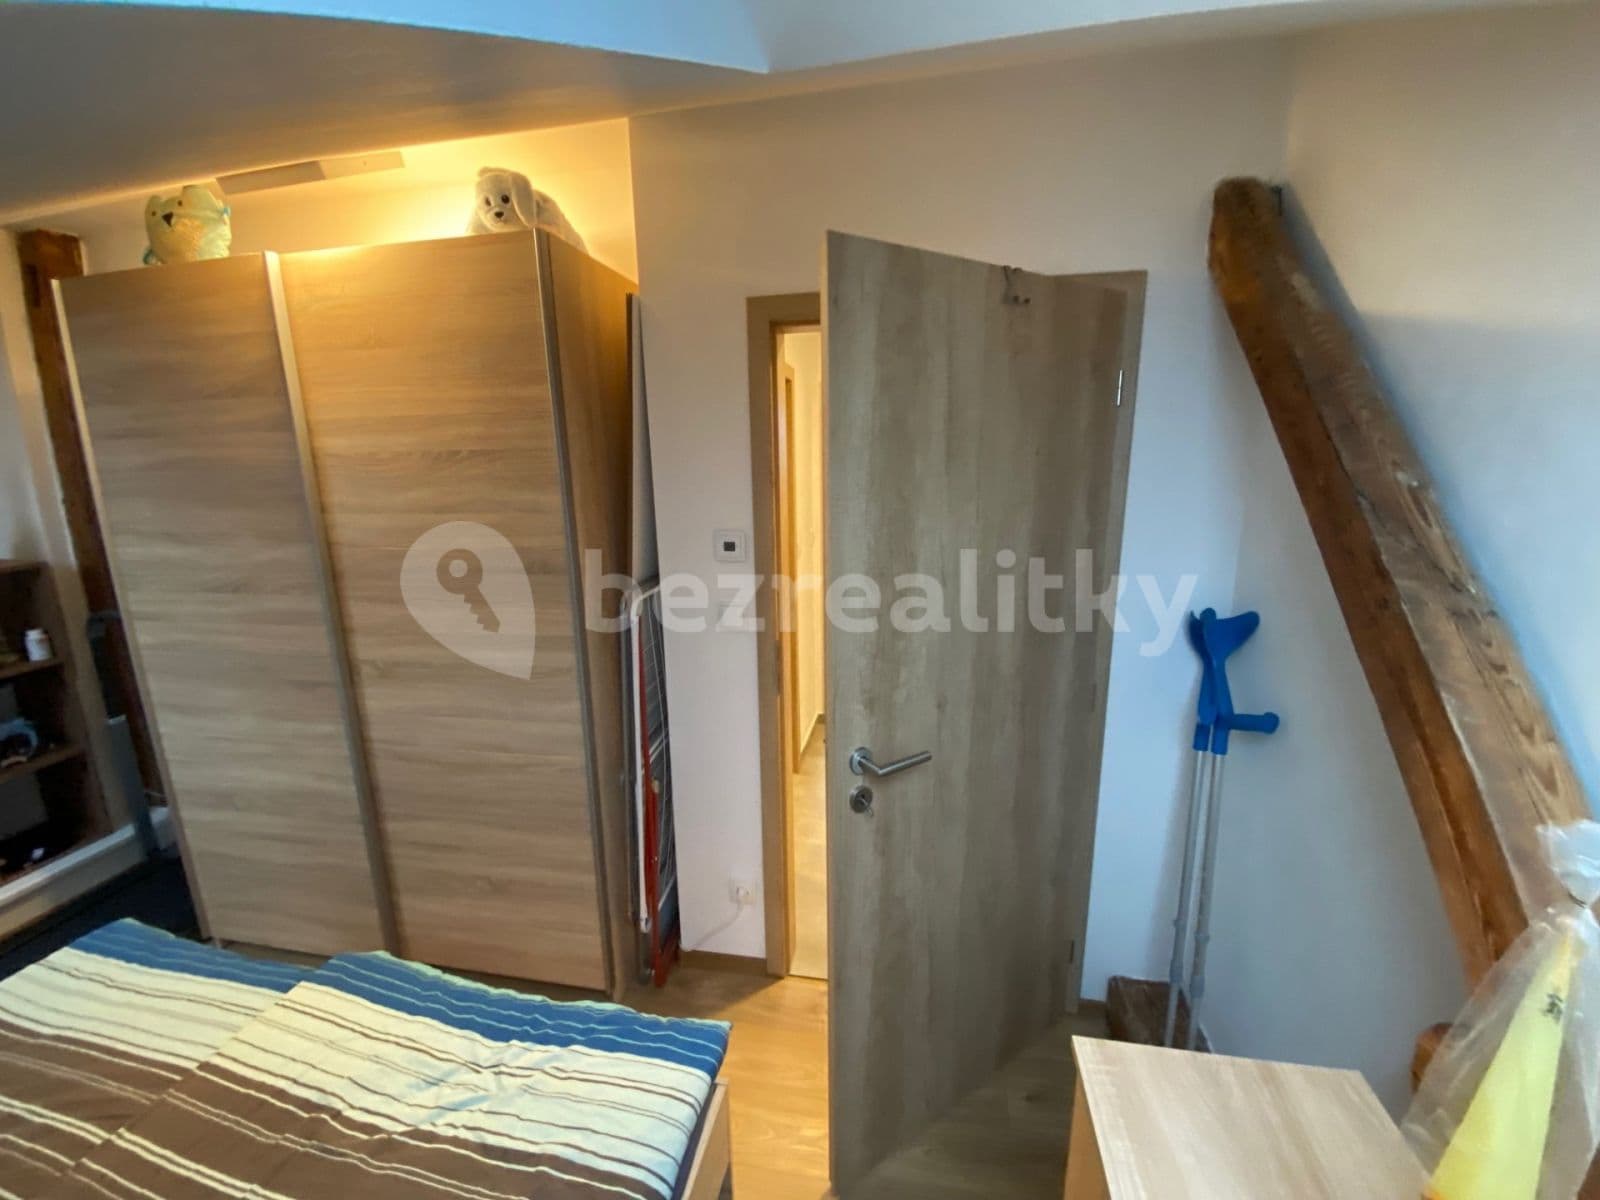 2 bedroom with open-plan kitchen flat to rent, 56 m², Kollárova, Jihlava, Vysočina Region